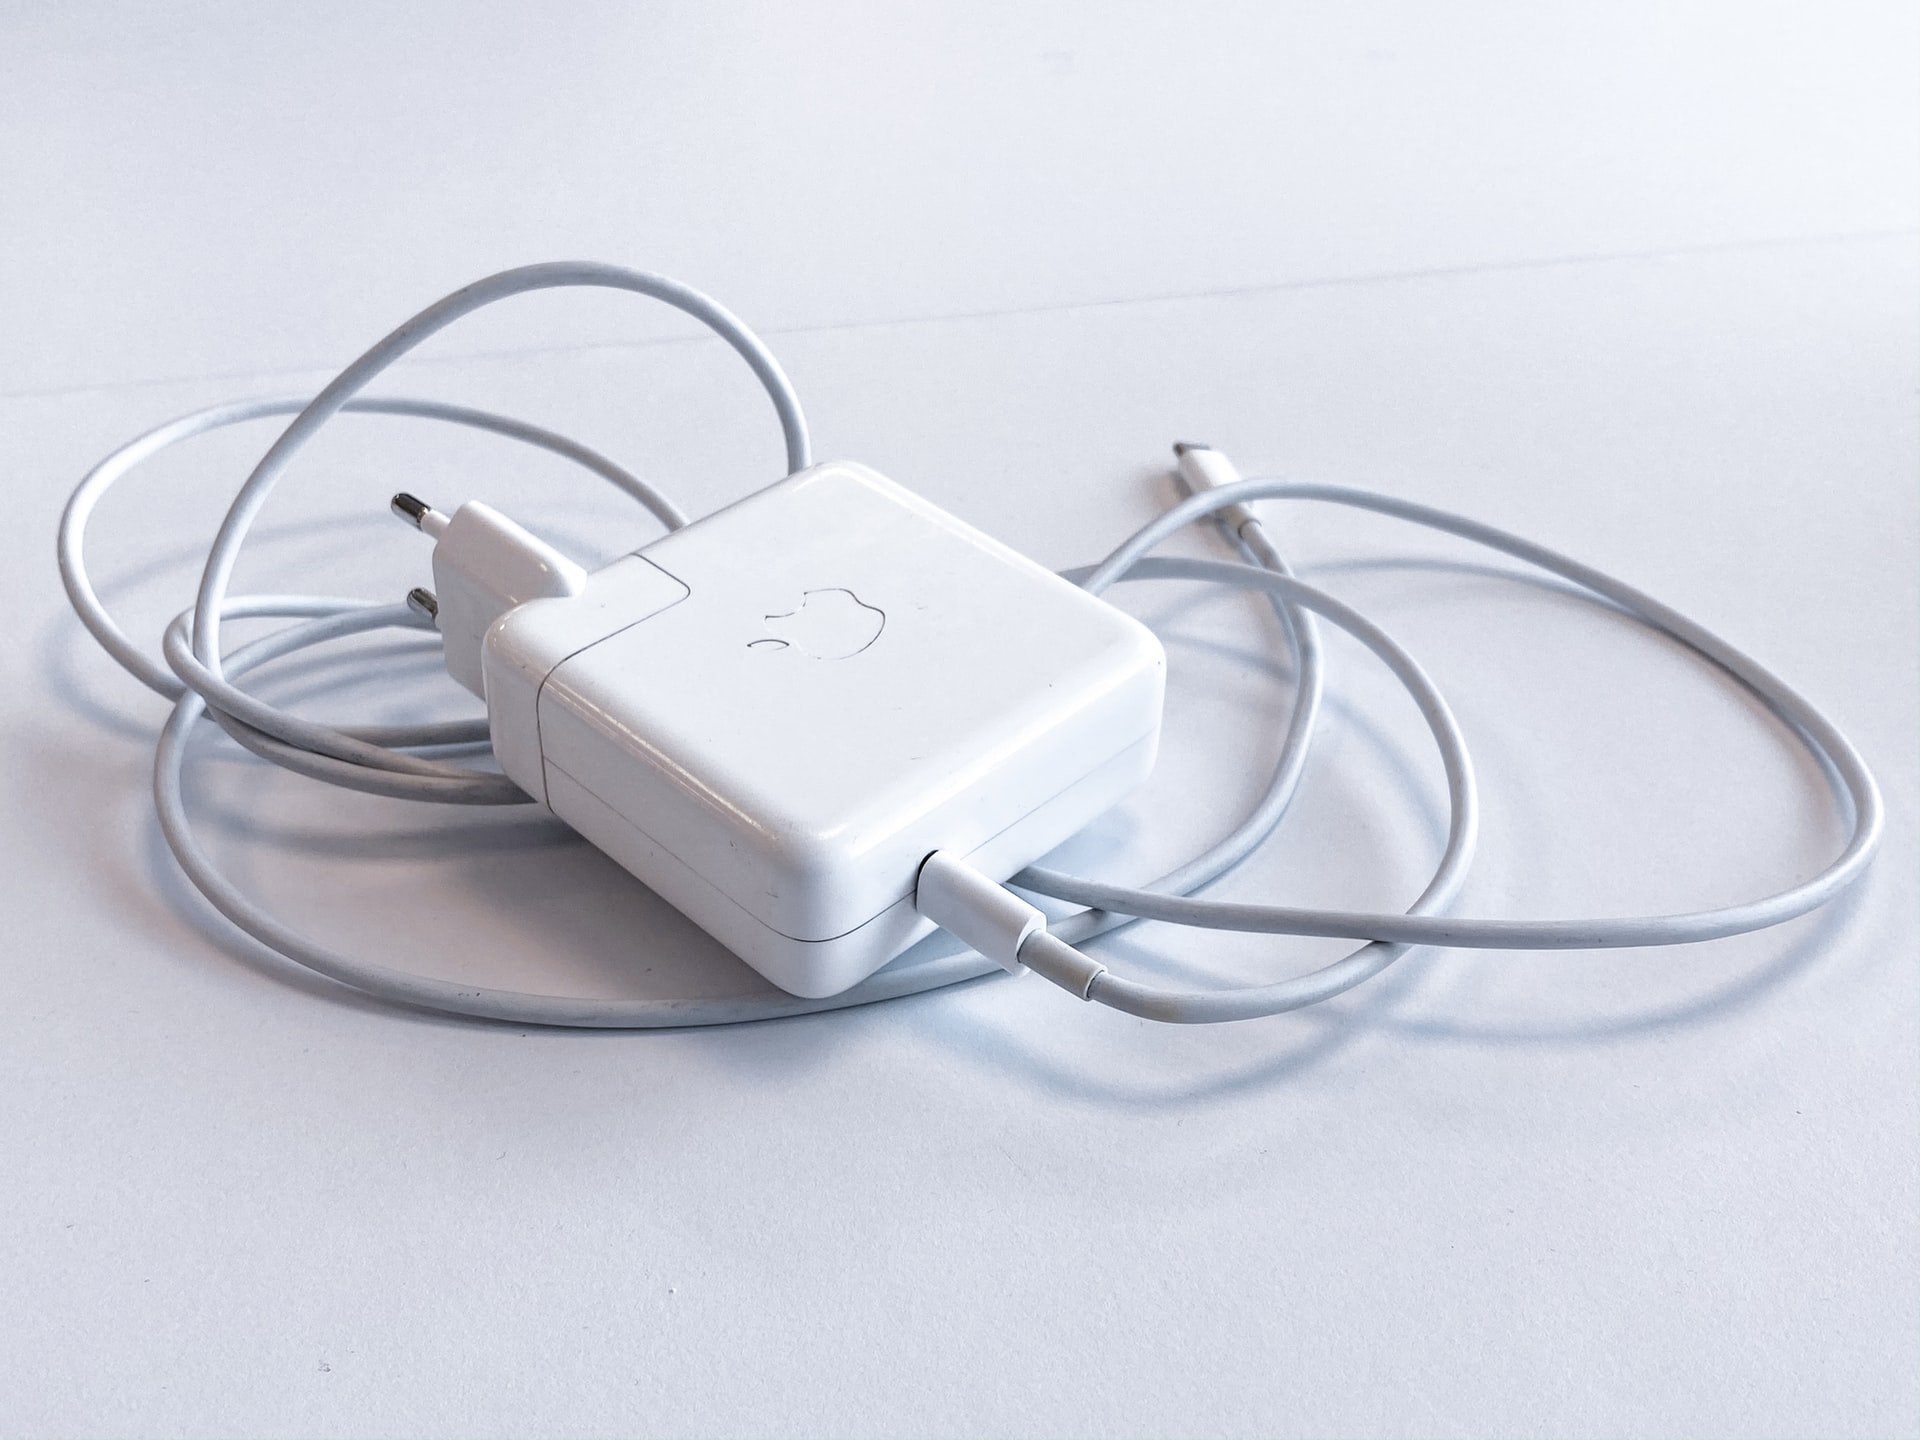 Apple macbook pro charger overheating amd 6300 six core